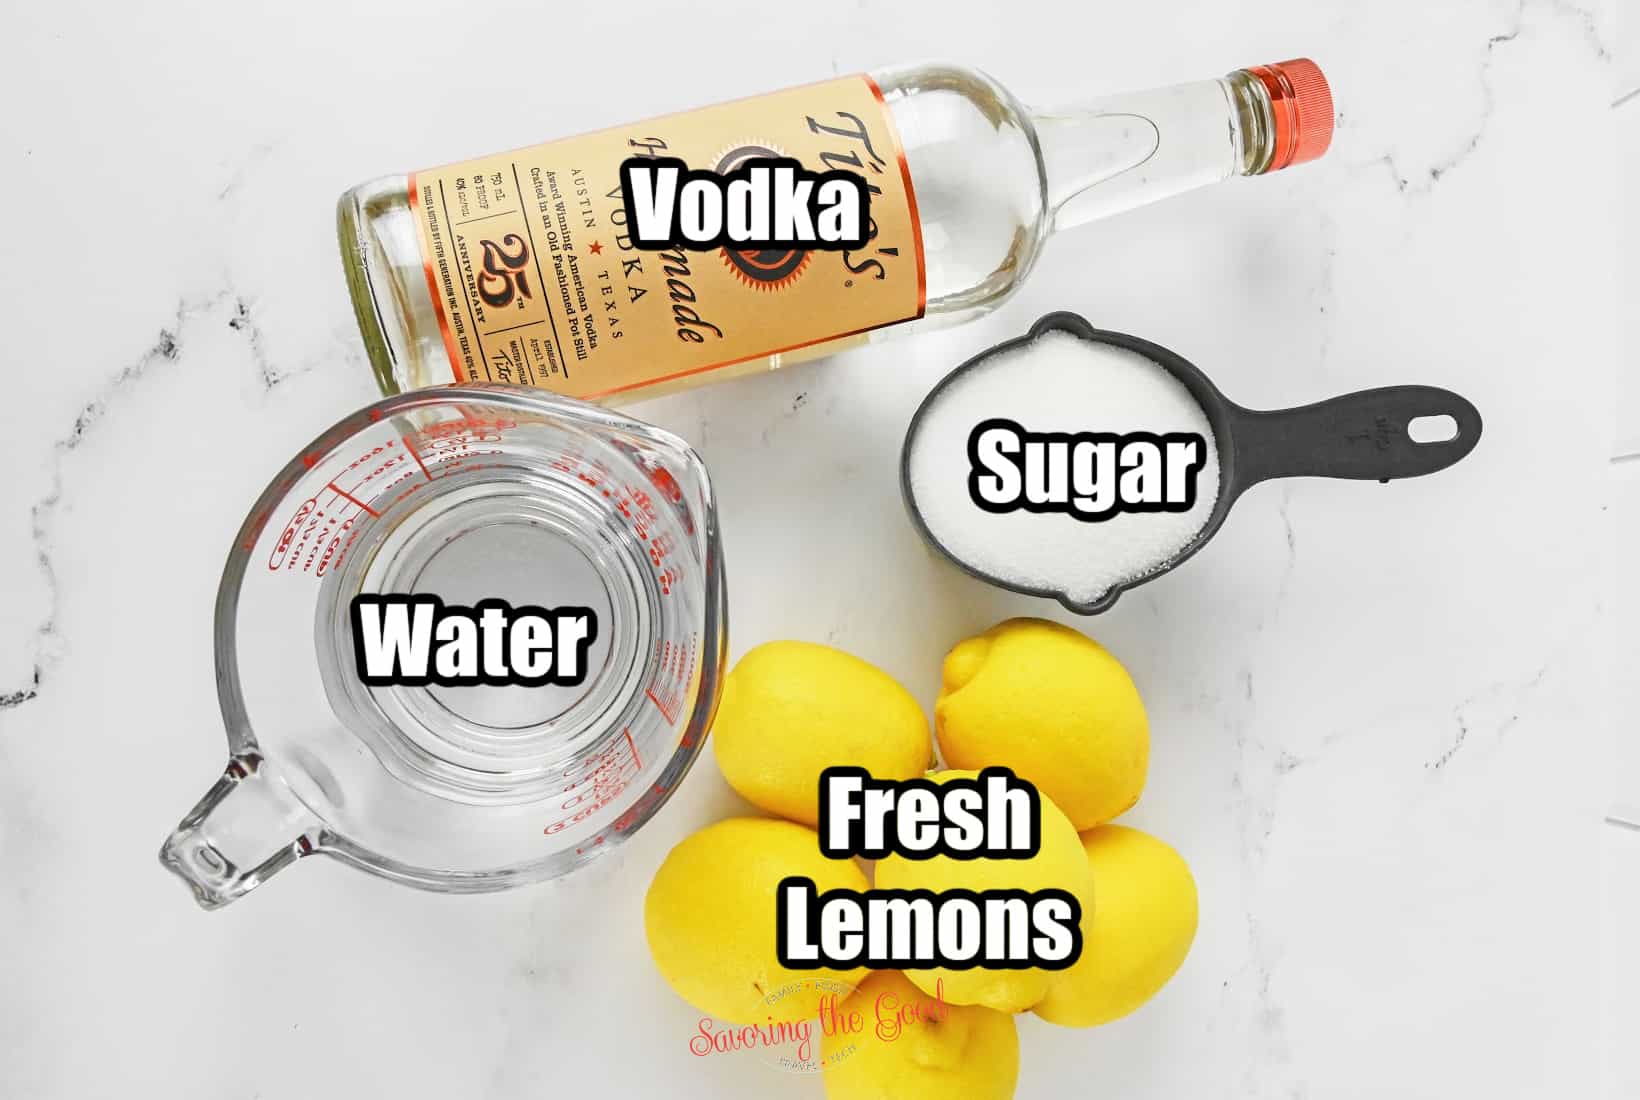 frozen lemonade with vodka ingredients with text overlays, vodka, sugar, water, fresh lemons.